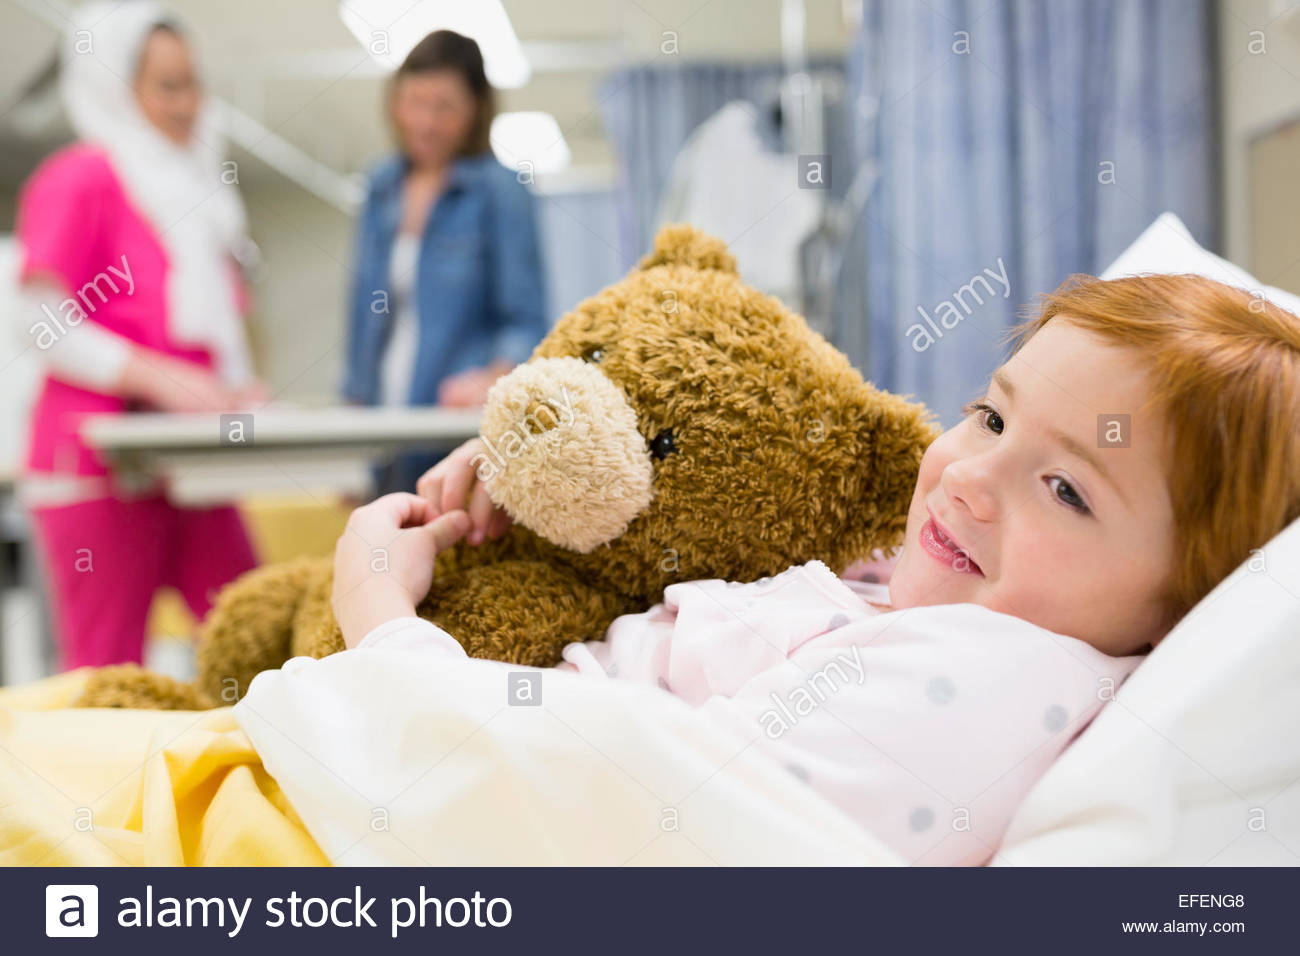 Girl hugging teddy bear in hospital bed Stock Photo